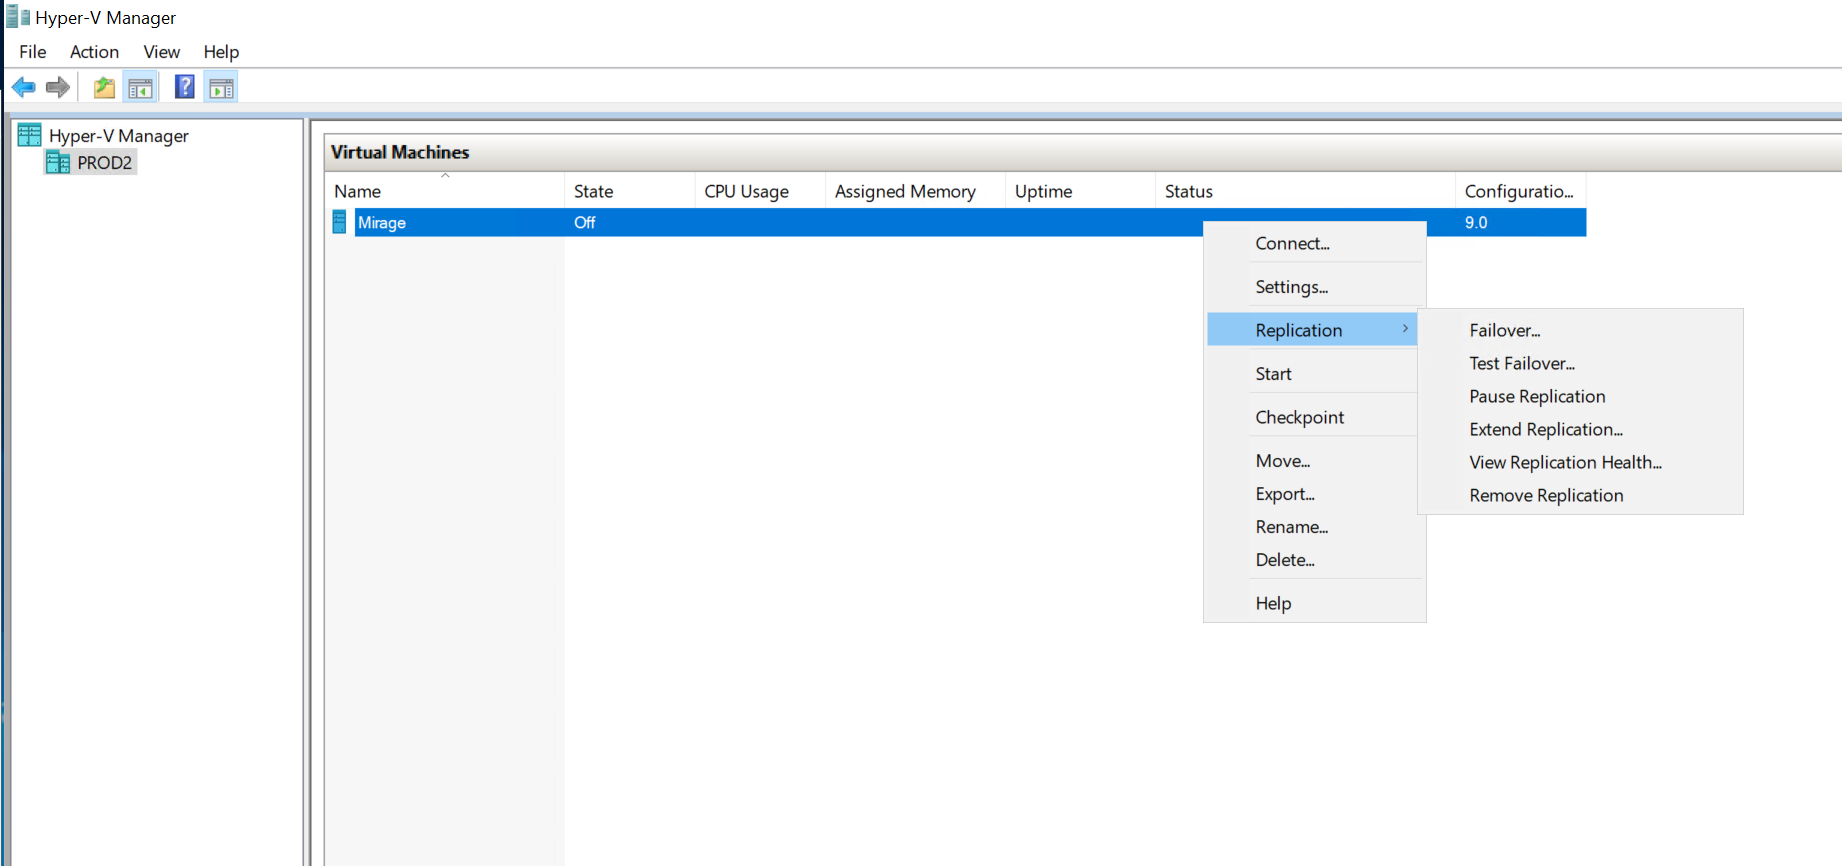 Hyper-V Manager console shows the Remove Replication menu option